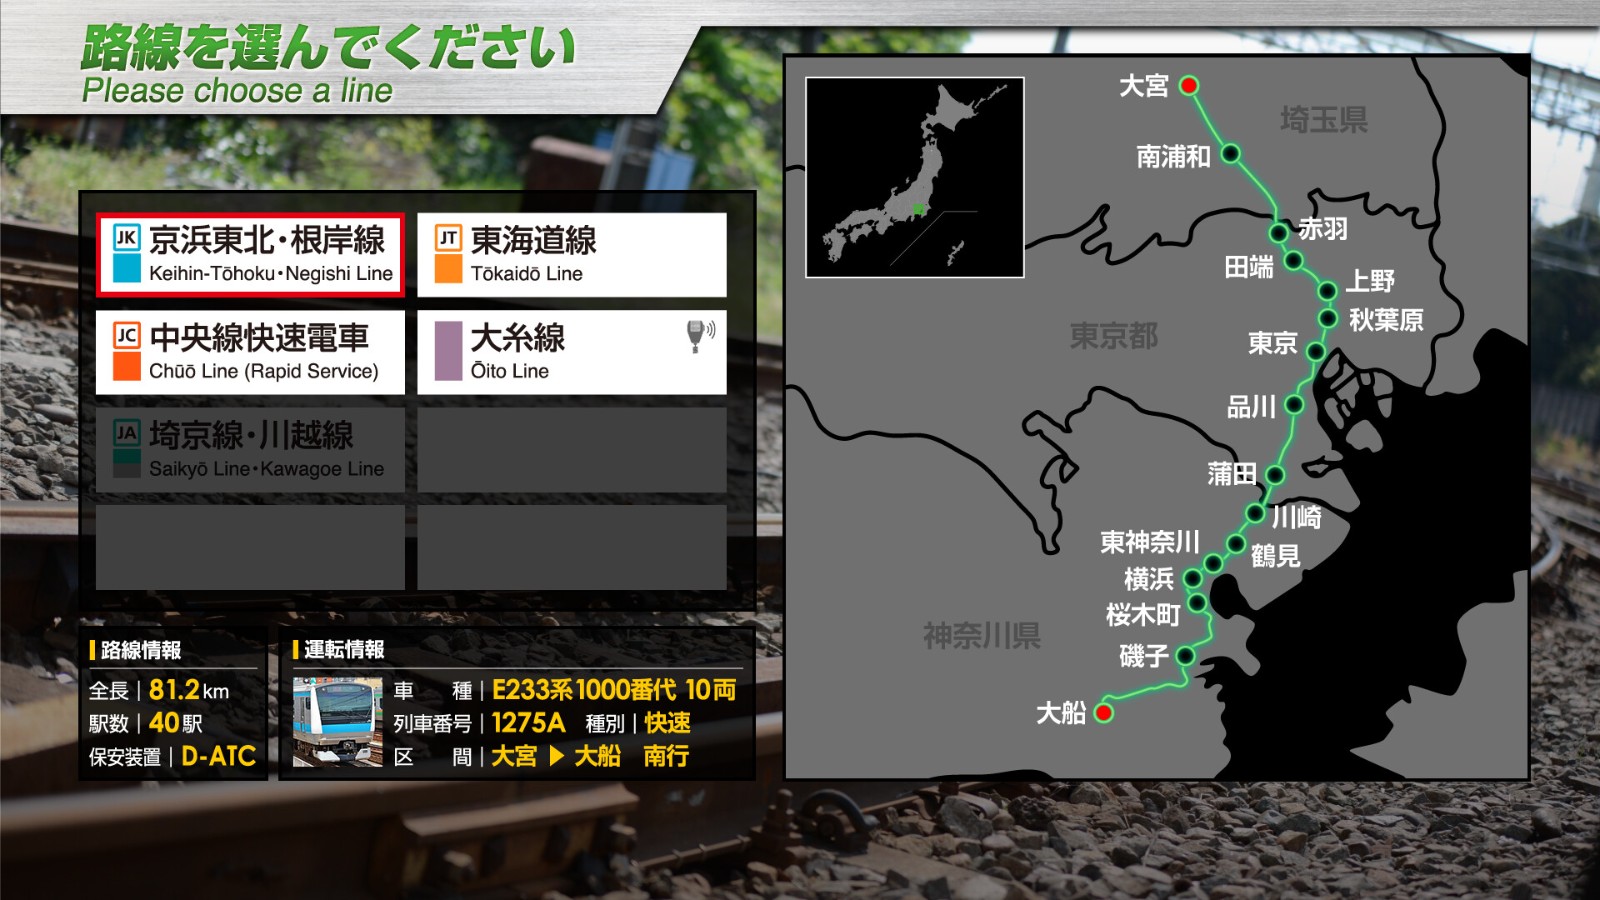 《JR东日本列车模拟器》新DLC上线 更详尽新道路启动